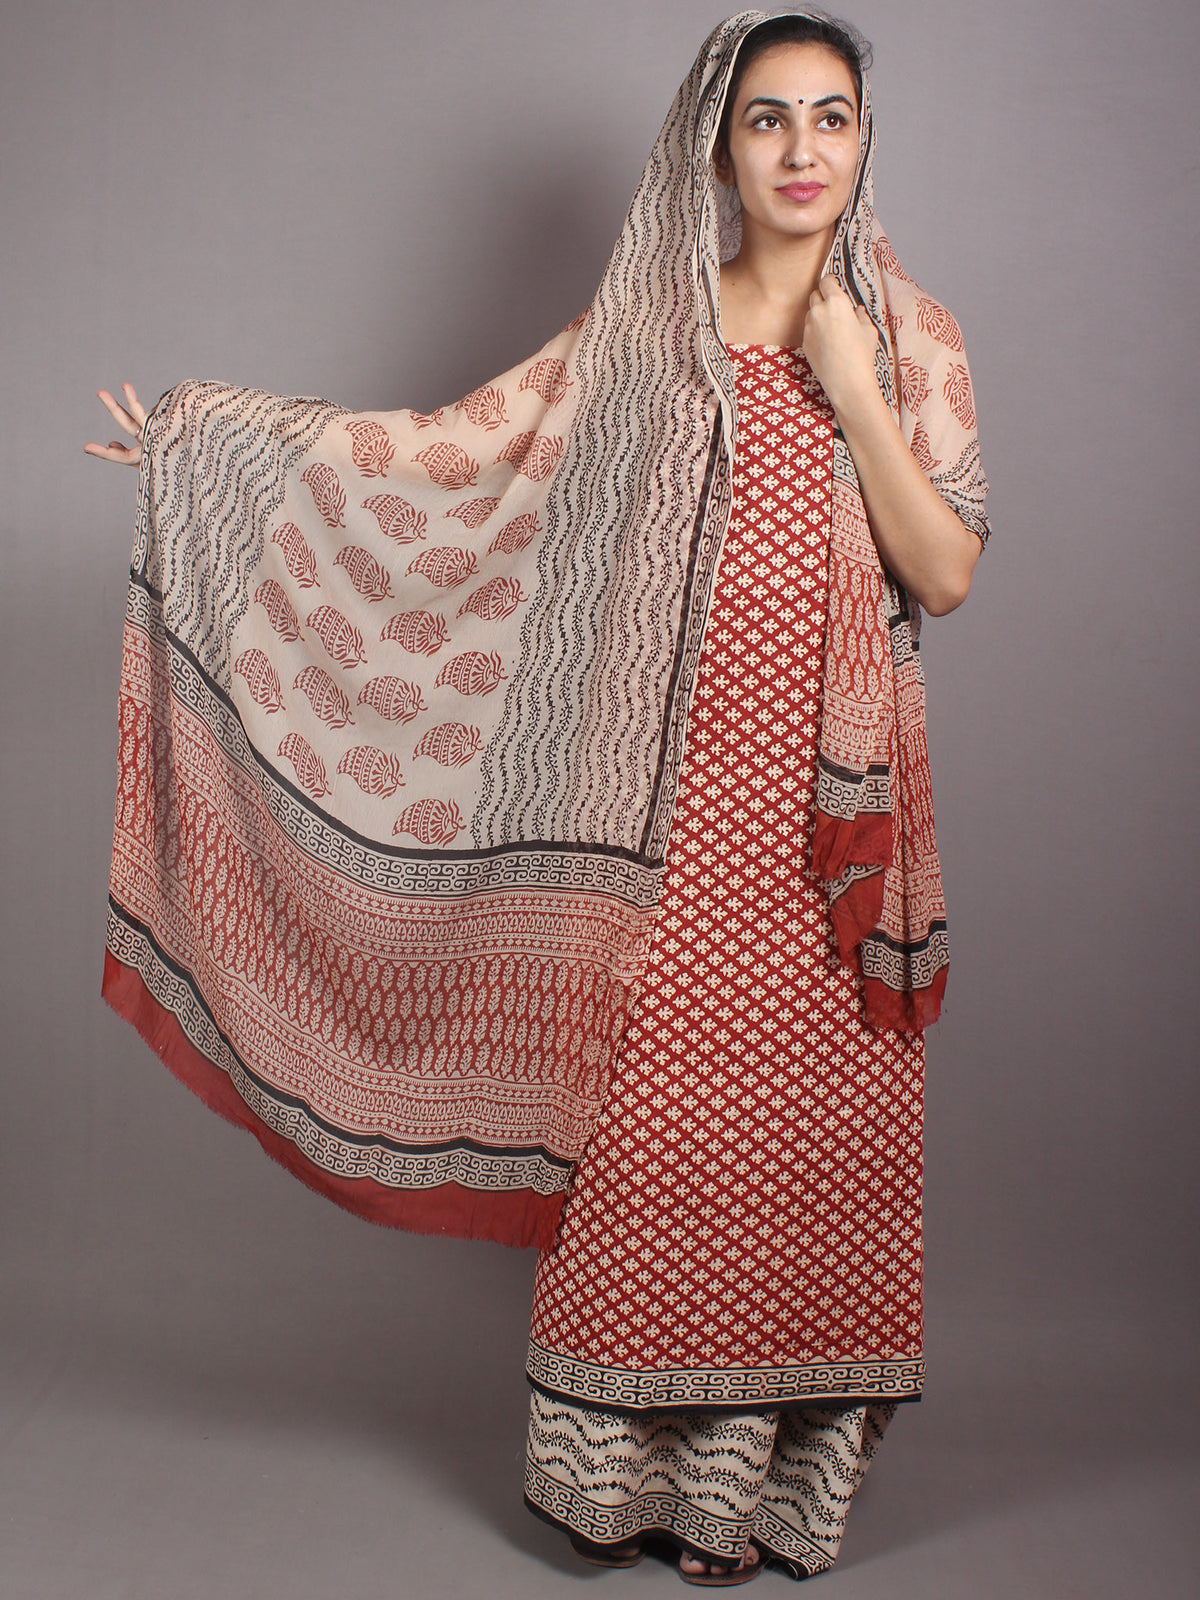 Red Beige Black Hand Block Printed Cotton Suit-Salwar Fabric With Chiffon Dupatta - S1628037